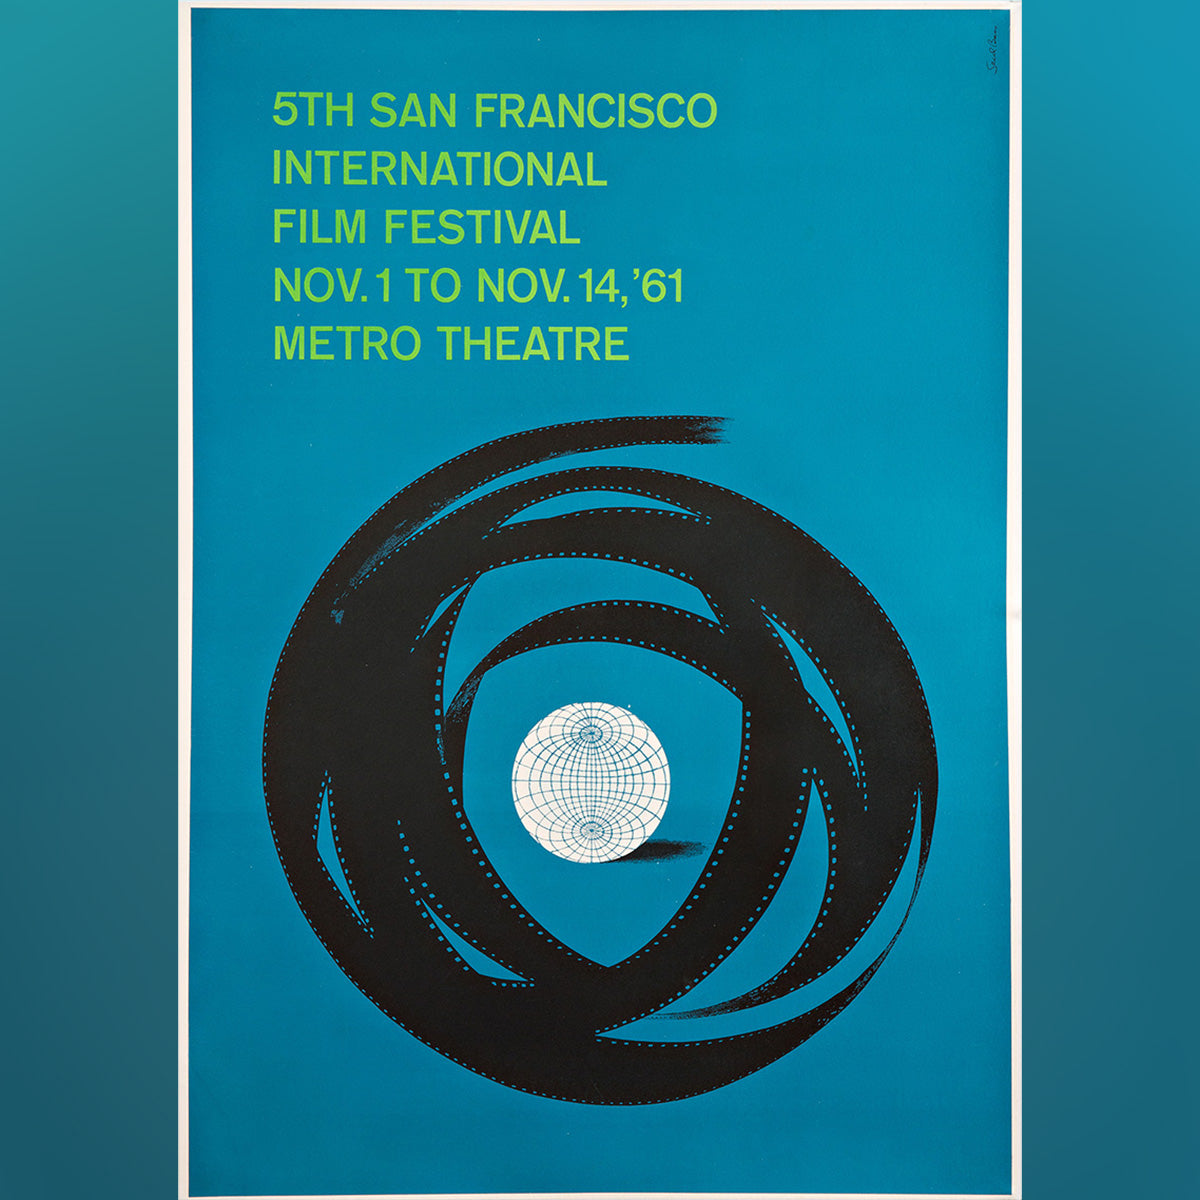 Original Movie Poster of 5th San Francisco Film Festival (1961)